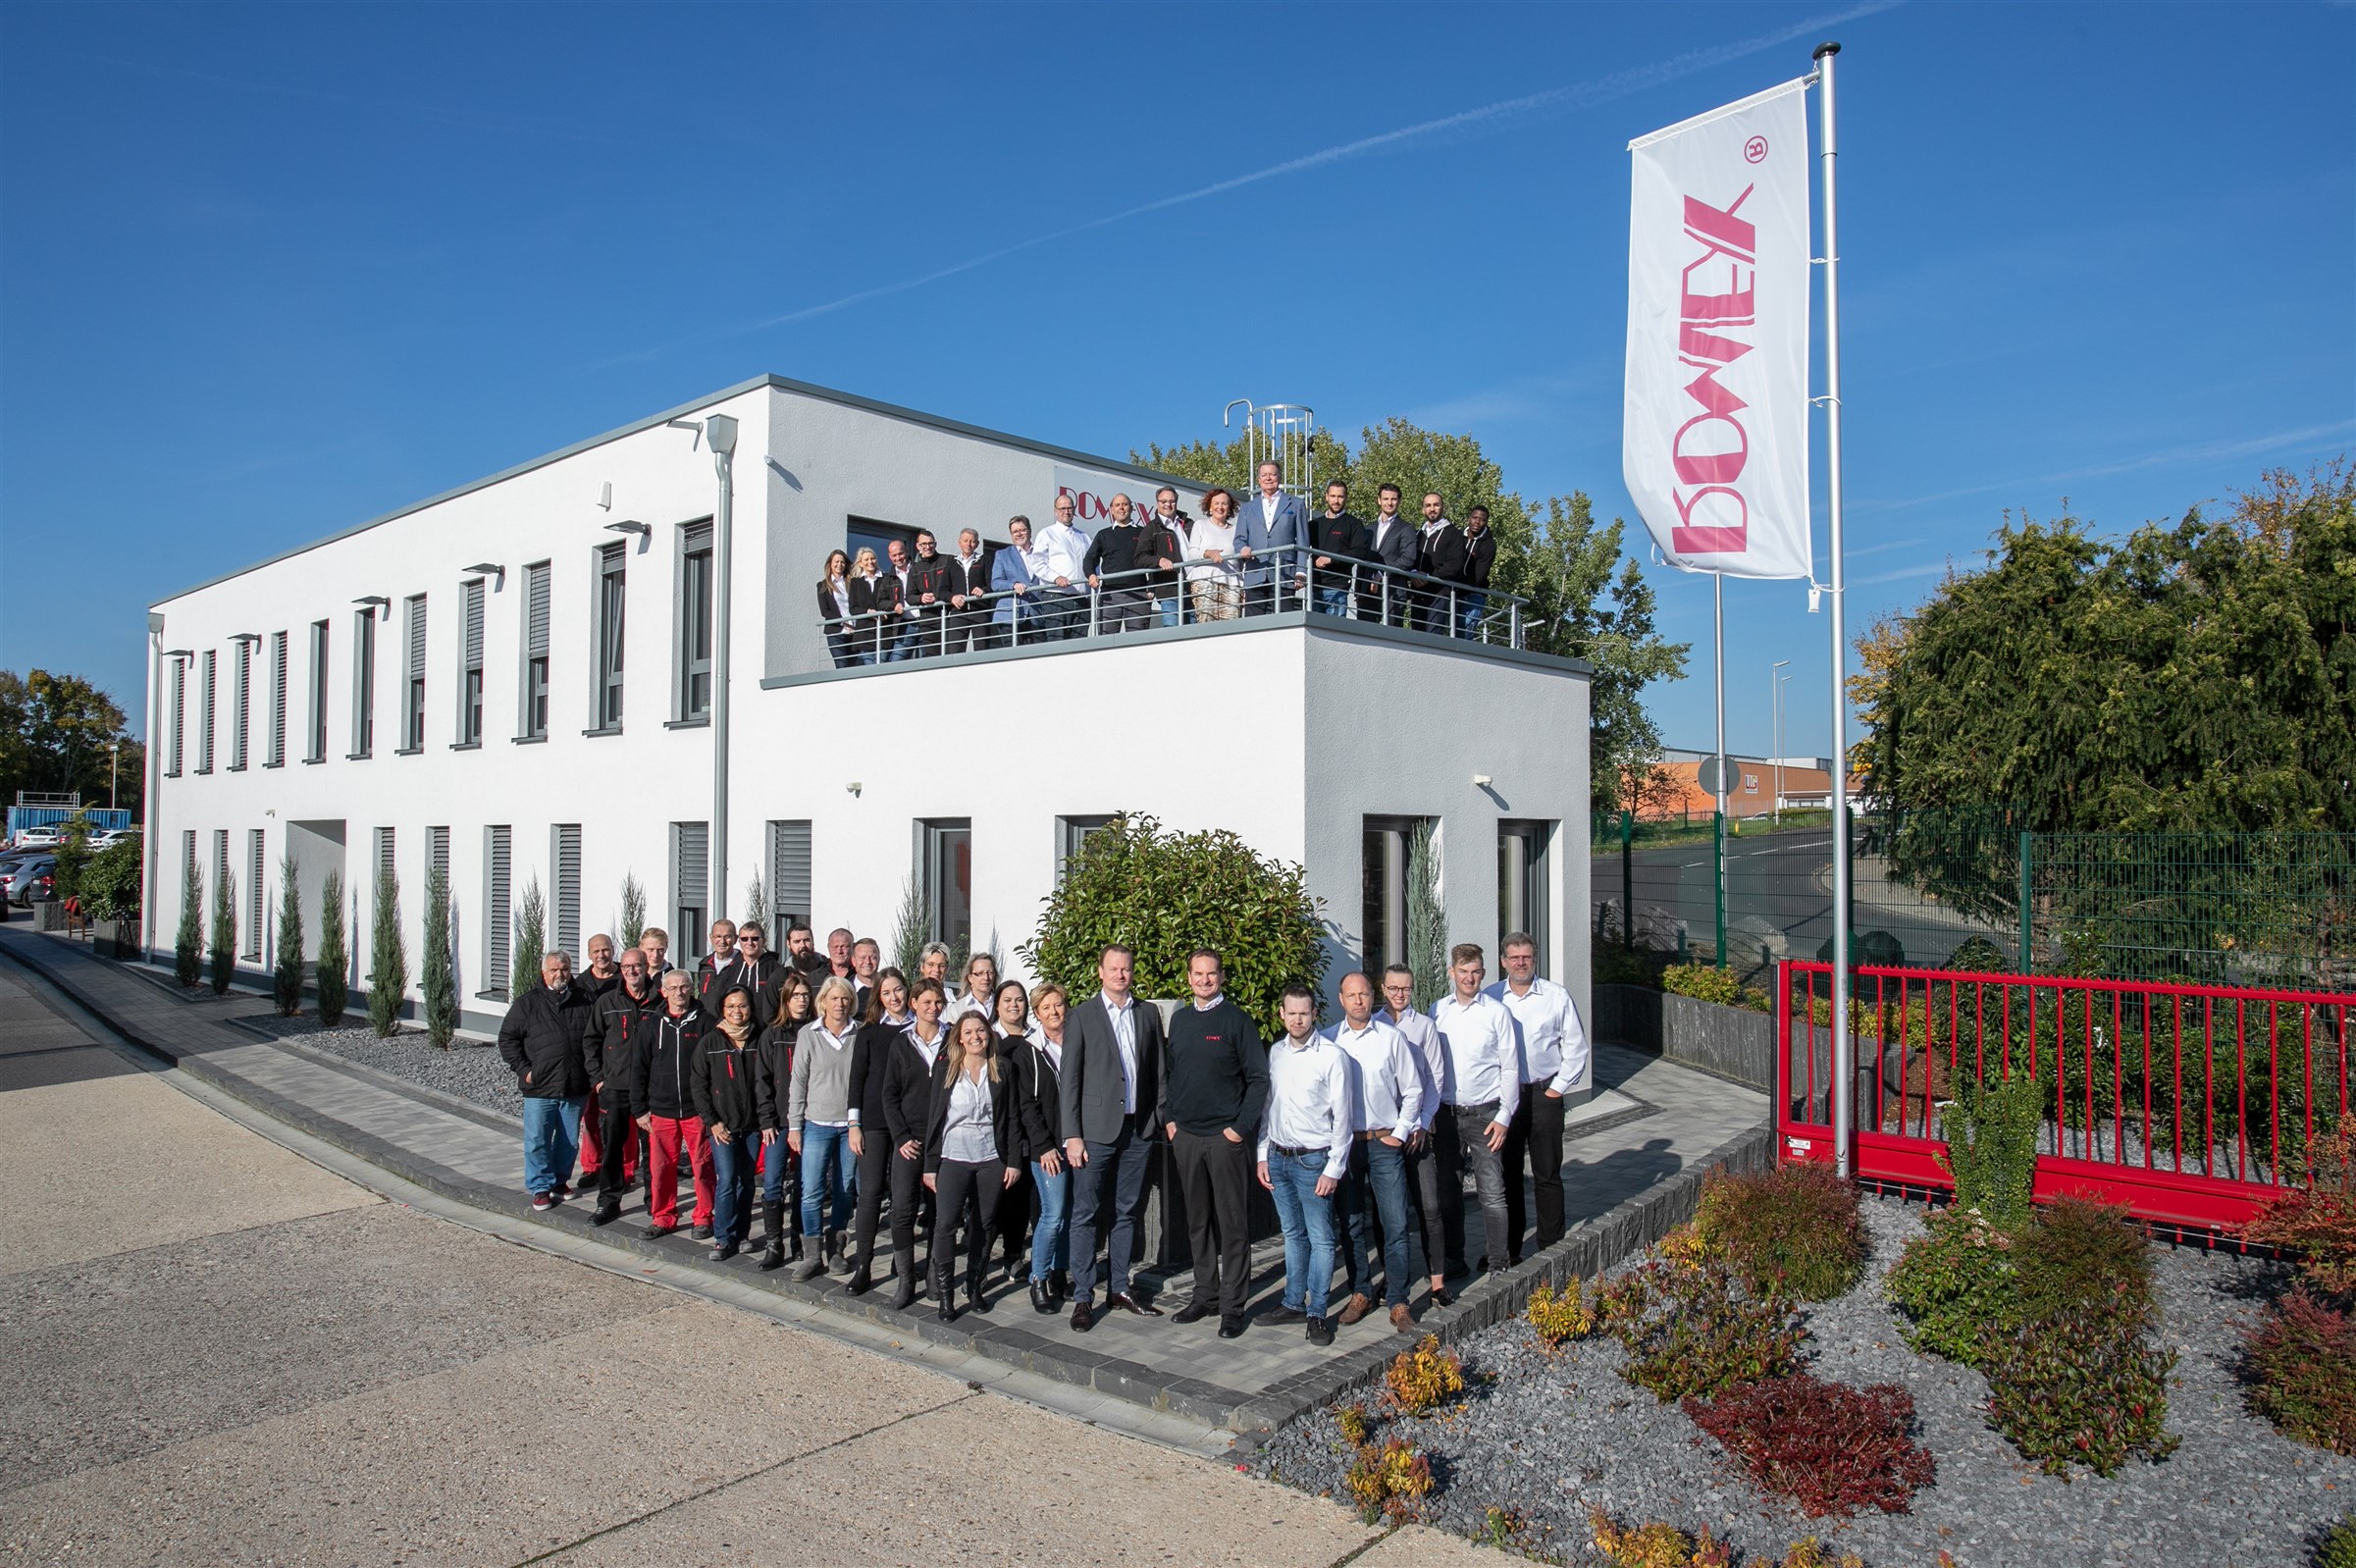 Romex GmbH headquarters